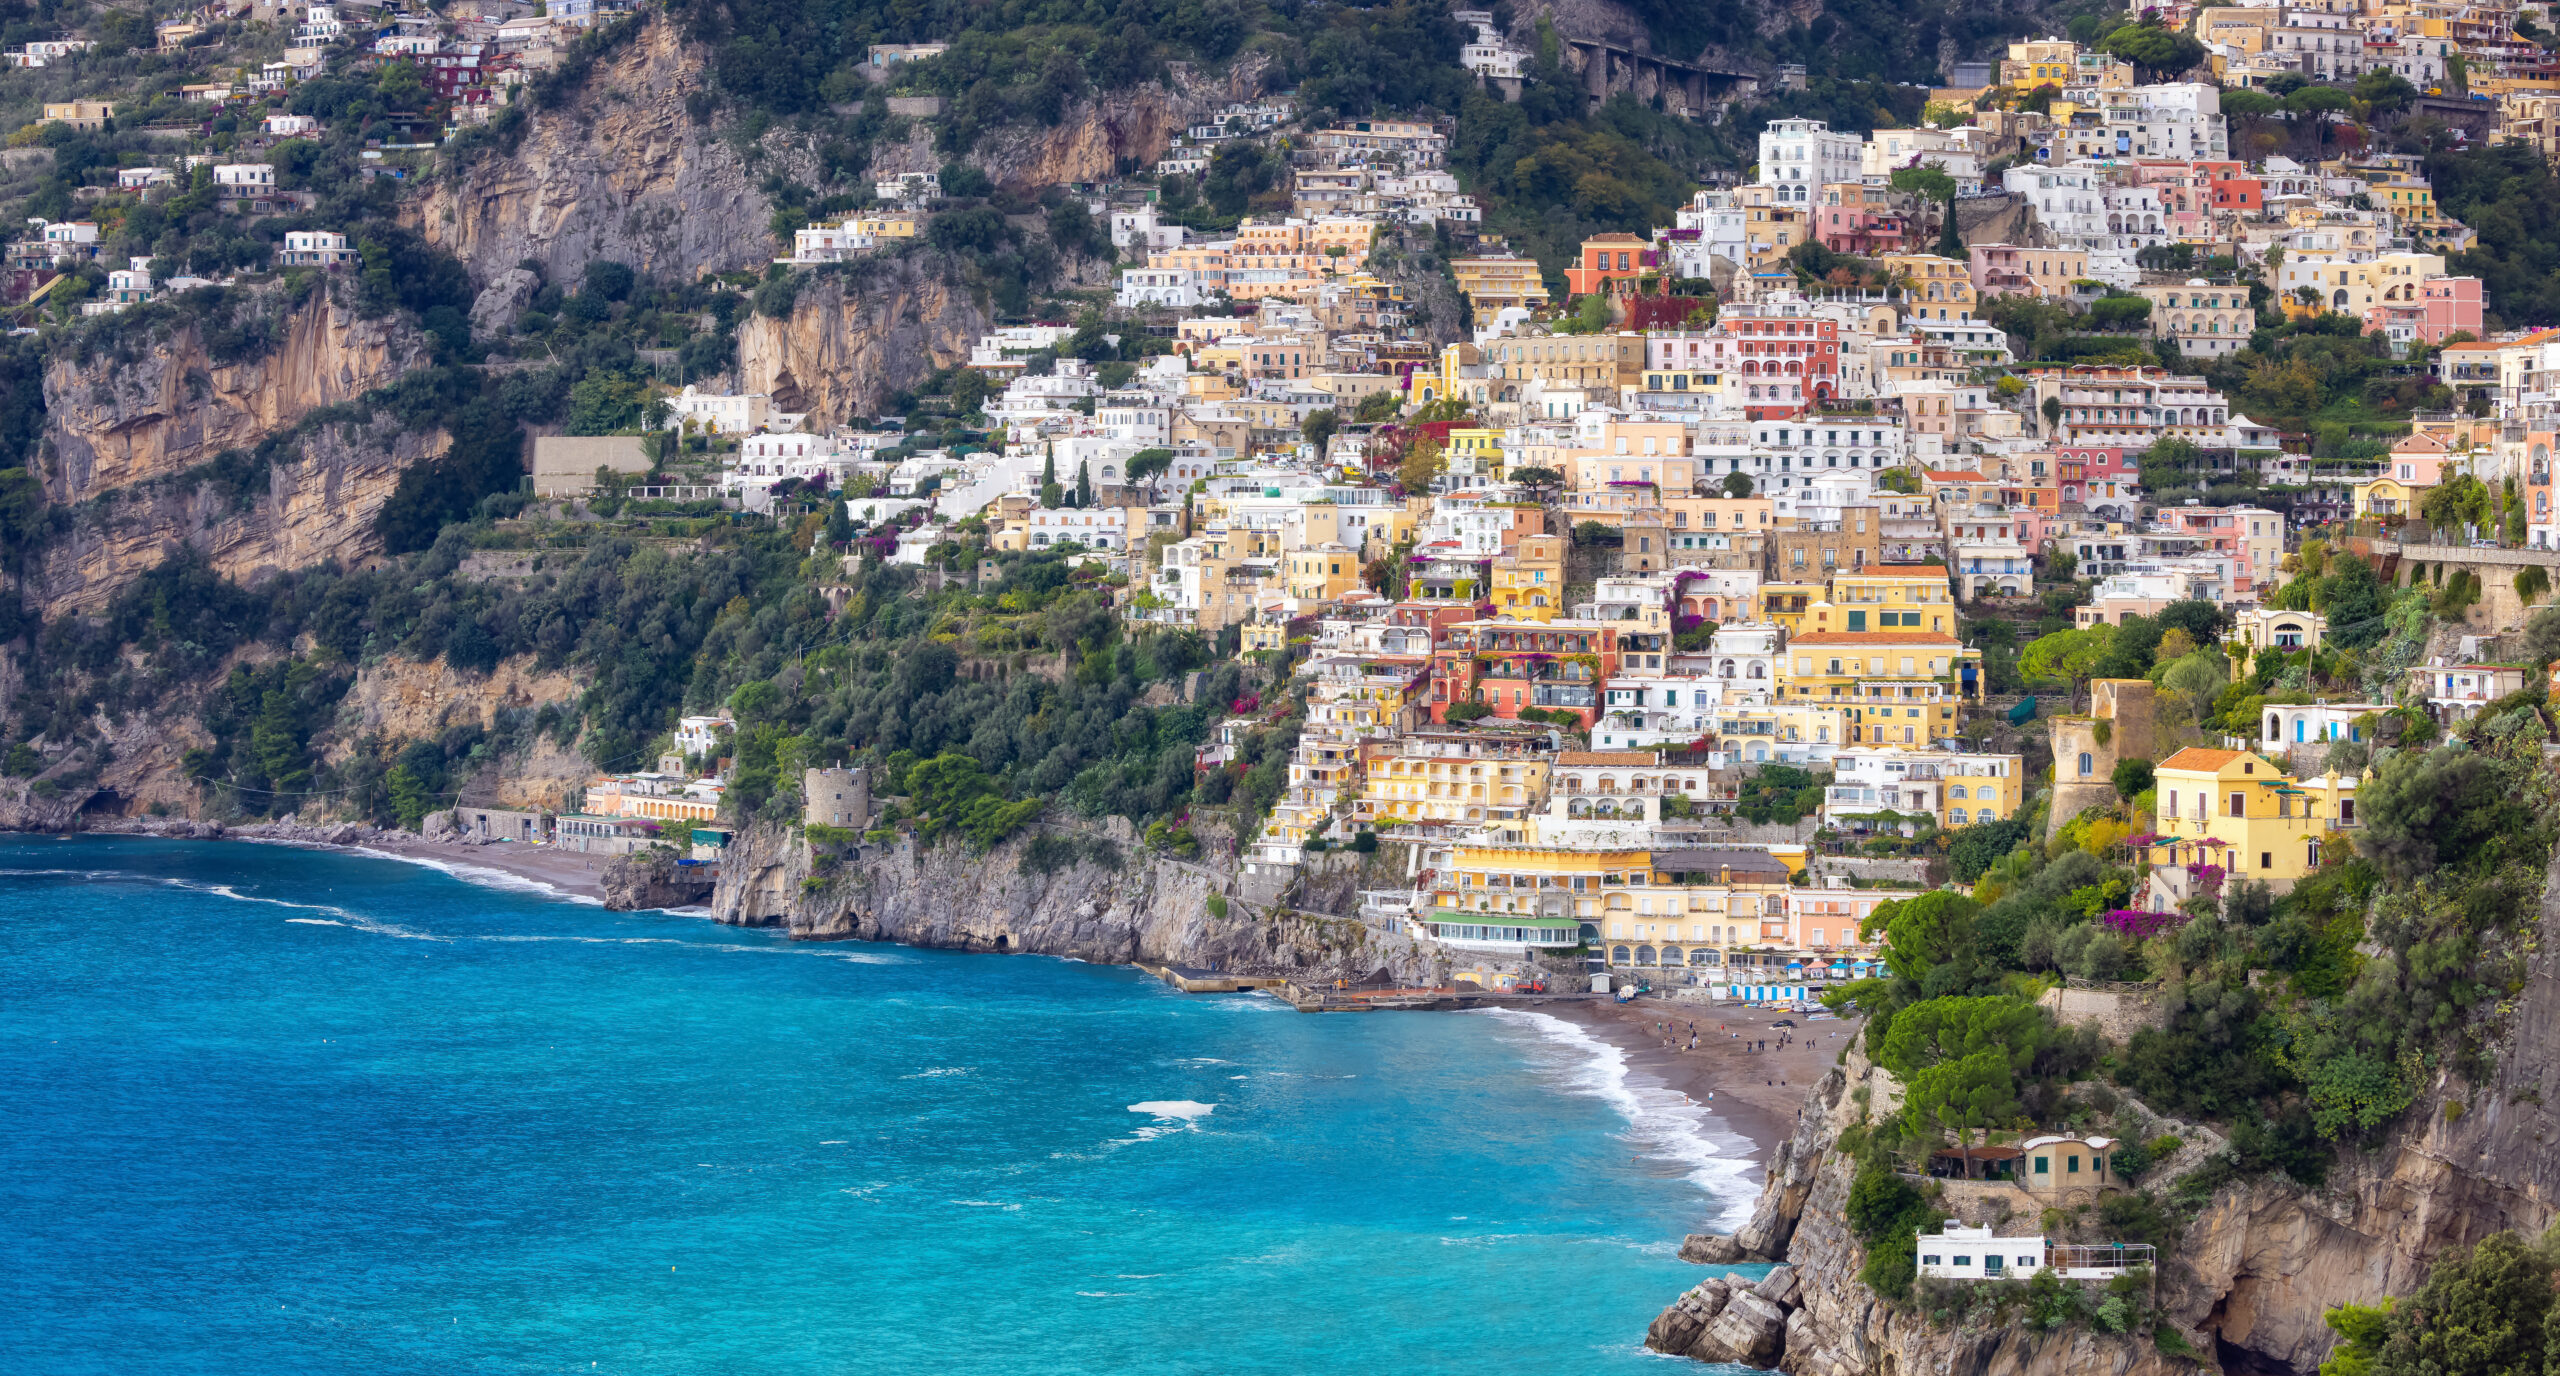 Experience the breathtaking beauty of Positano on the stunning Amalfi Coast in Italy.